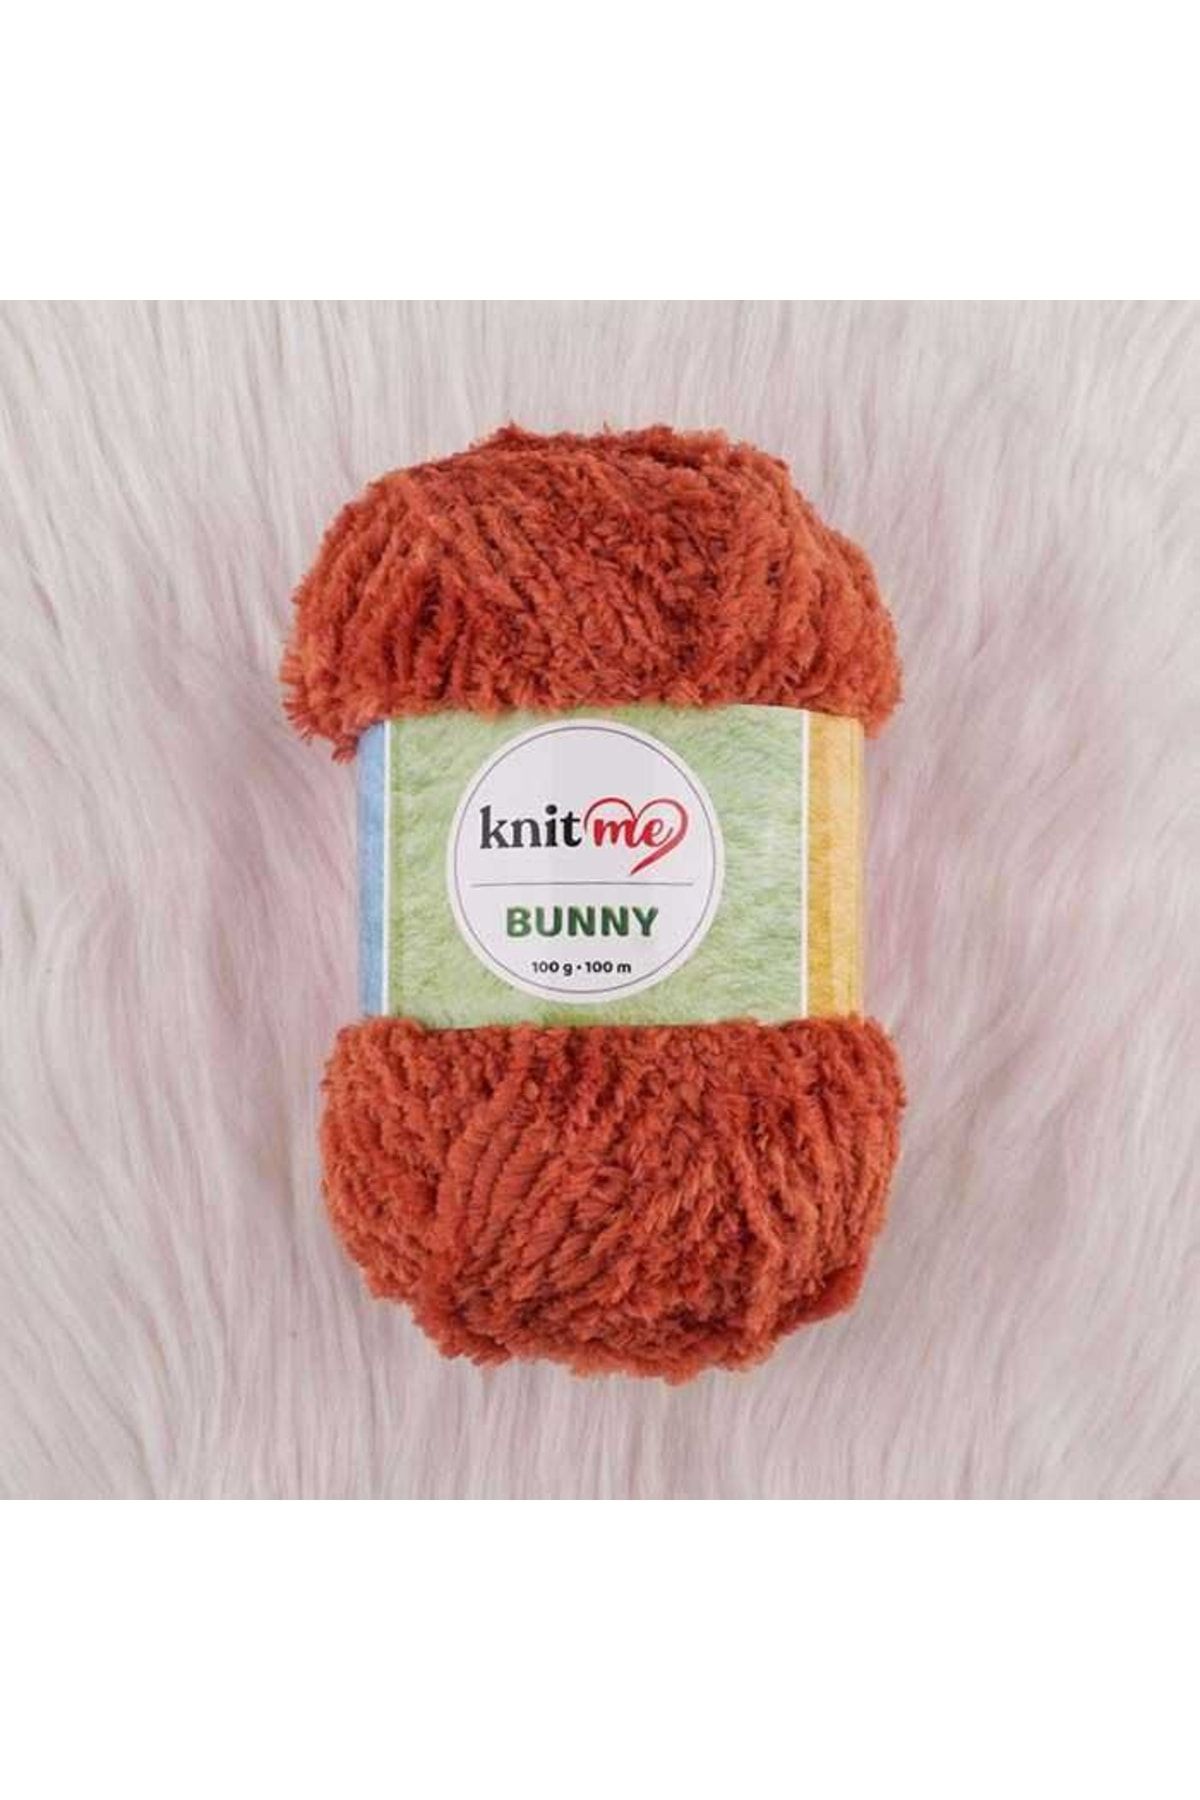 knitme Knit Me Bunny El Örgü Ipi 100 G.100 Mt. 976